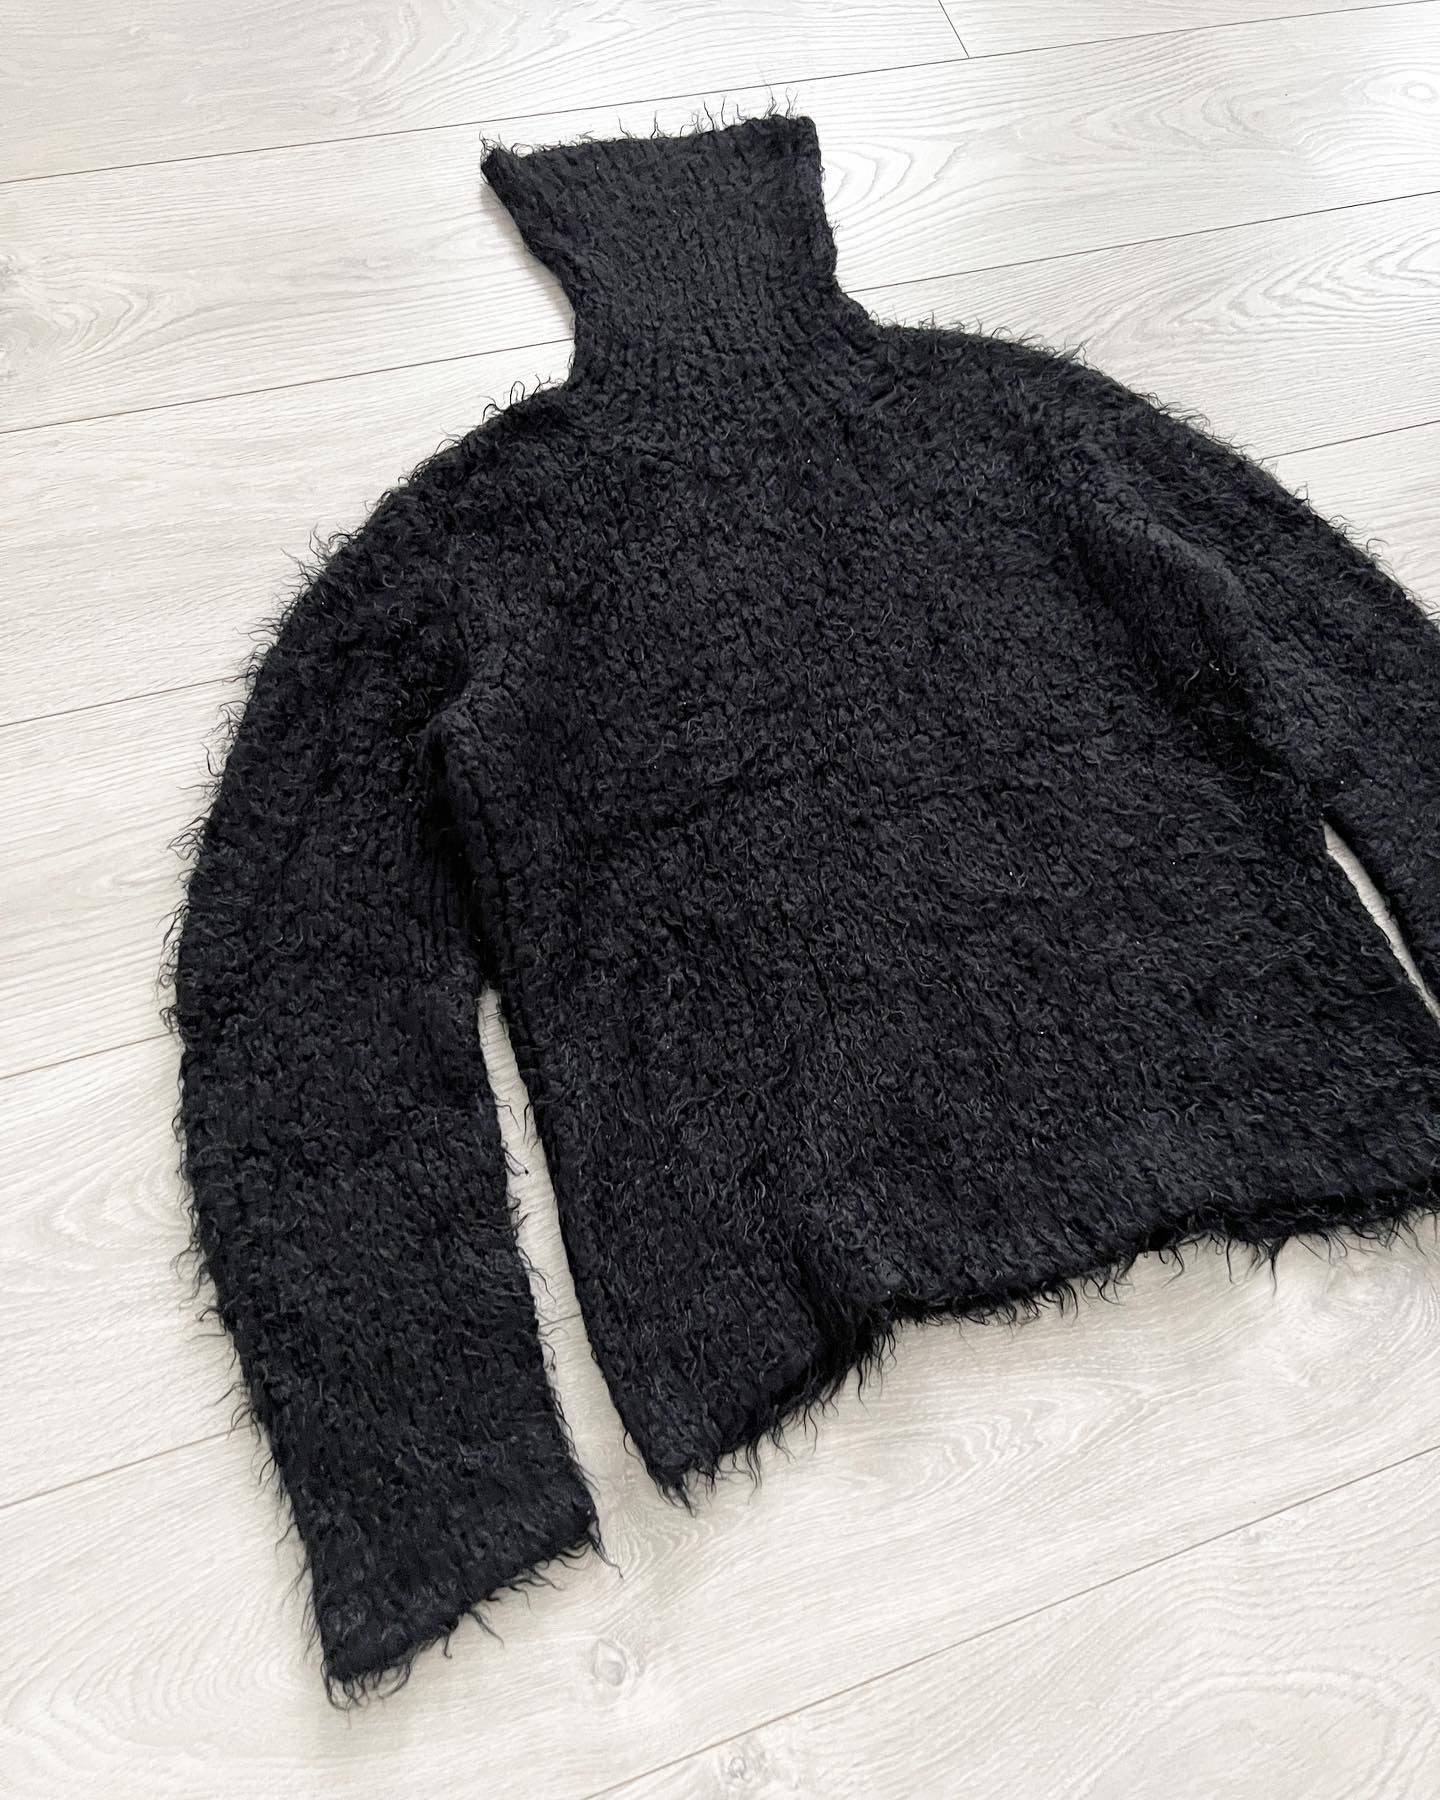 Issey Miyake 1990s Fuzzy Turtleneck Knit - Size M